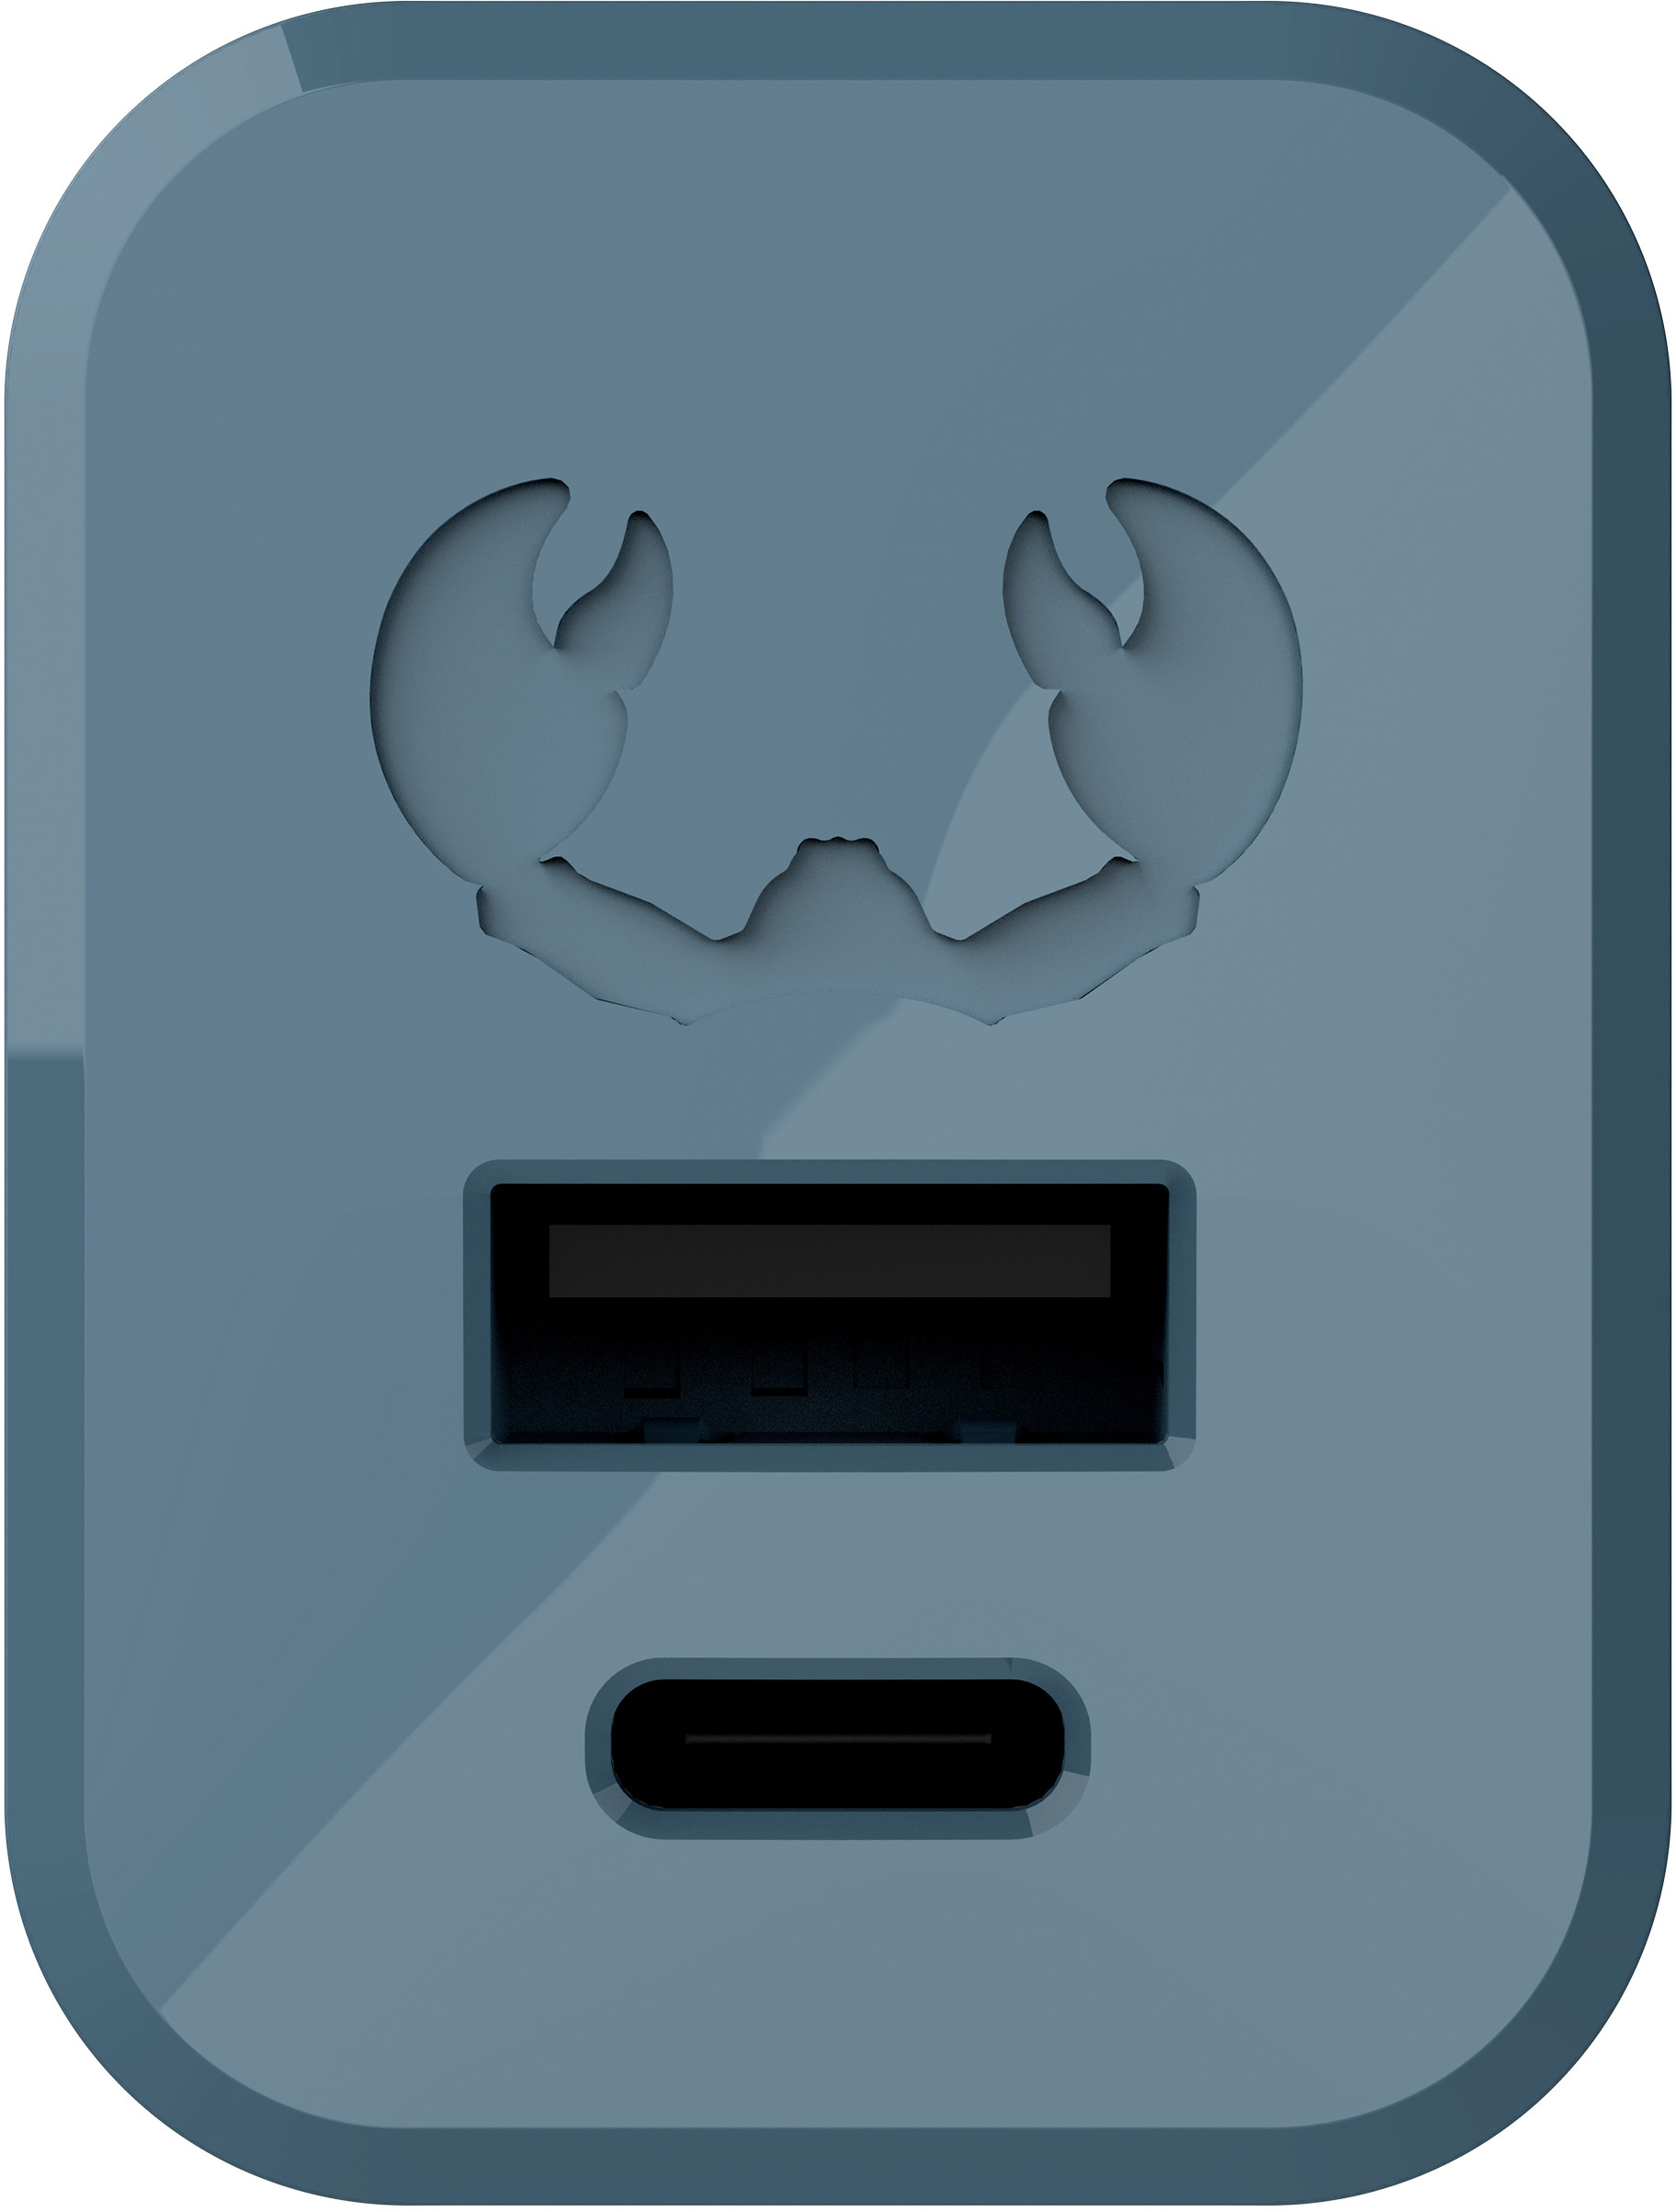 FRESH'N REBEL Charger USB-C PD Dive Blue 2WCC45DV + USB-C Cable 45W